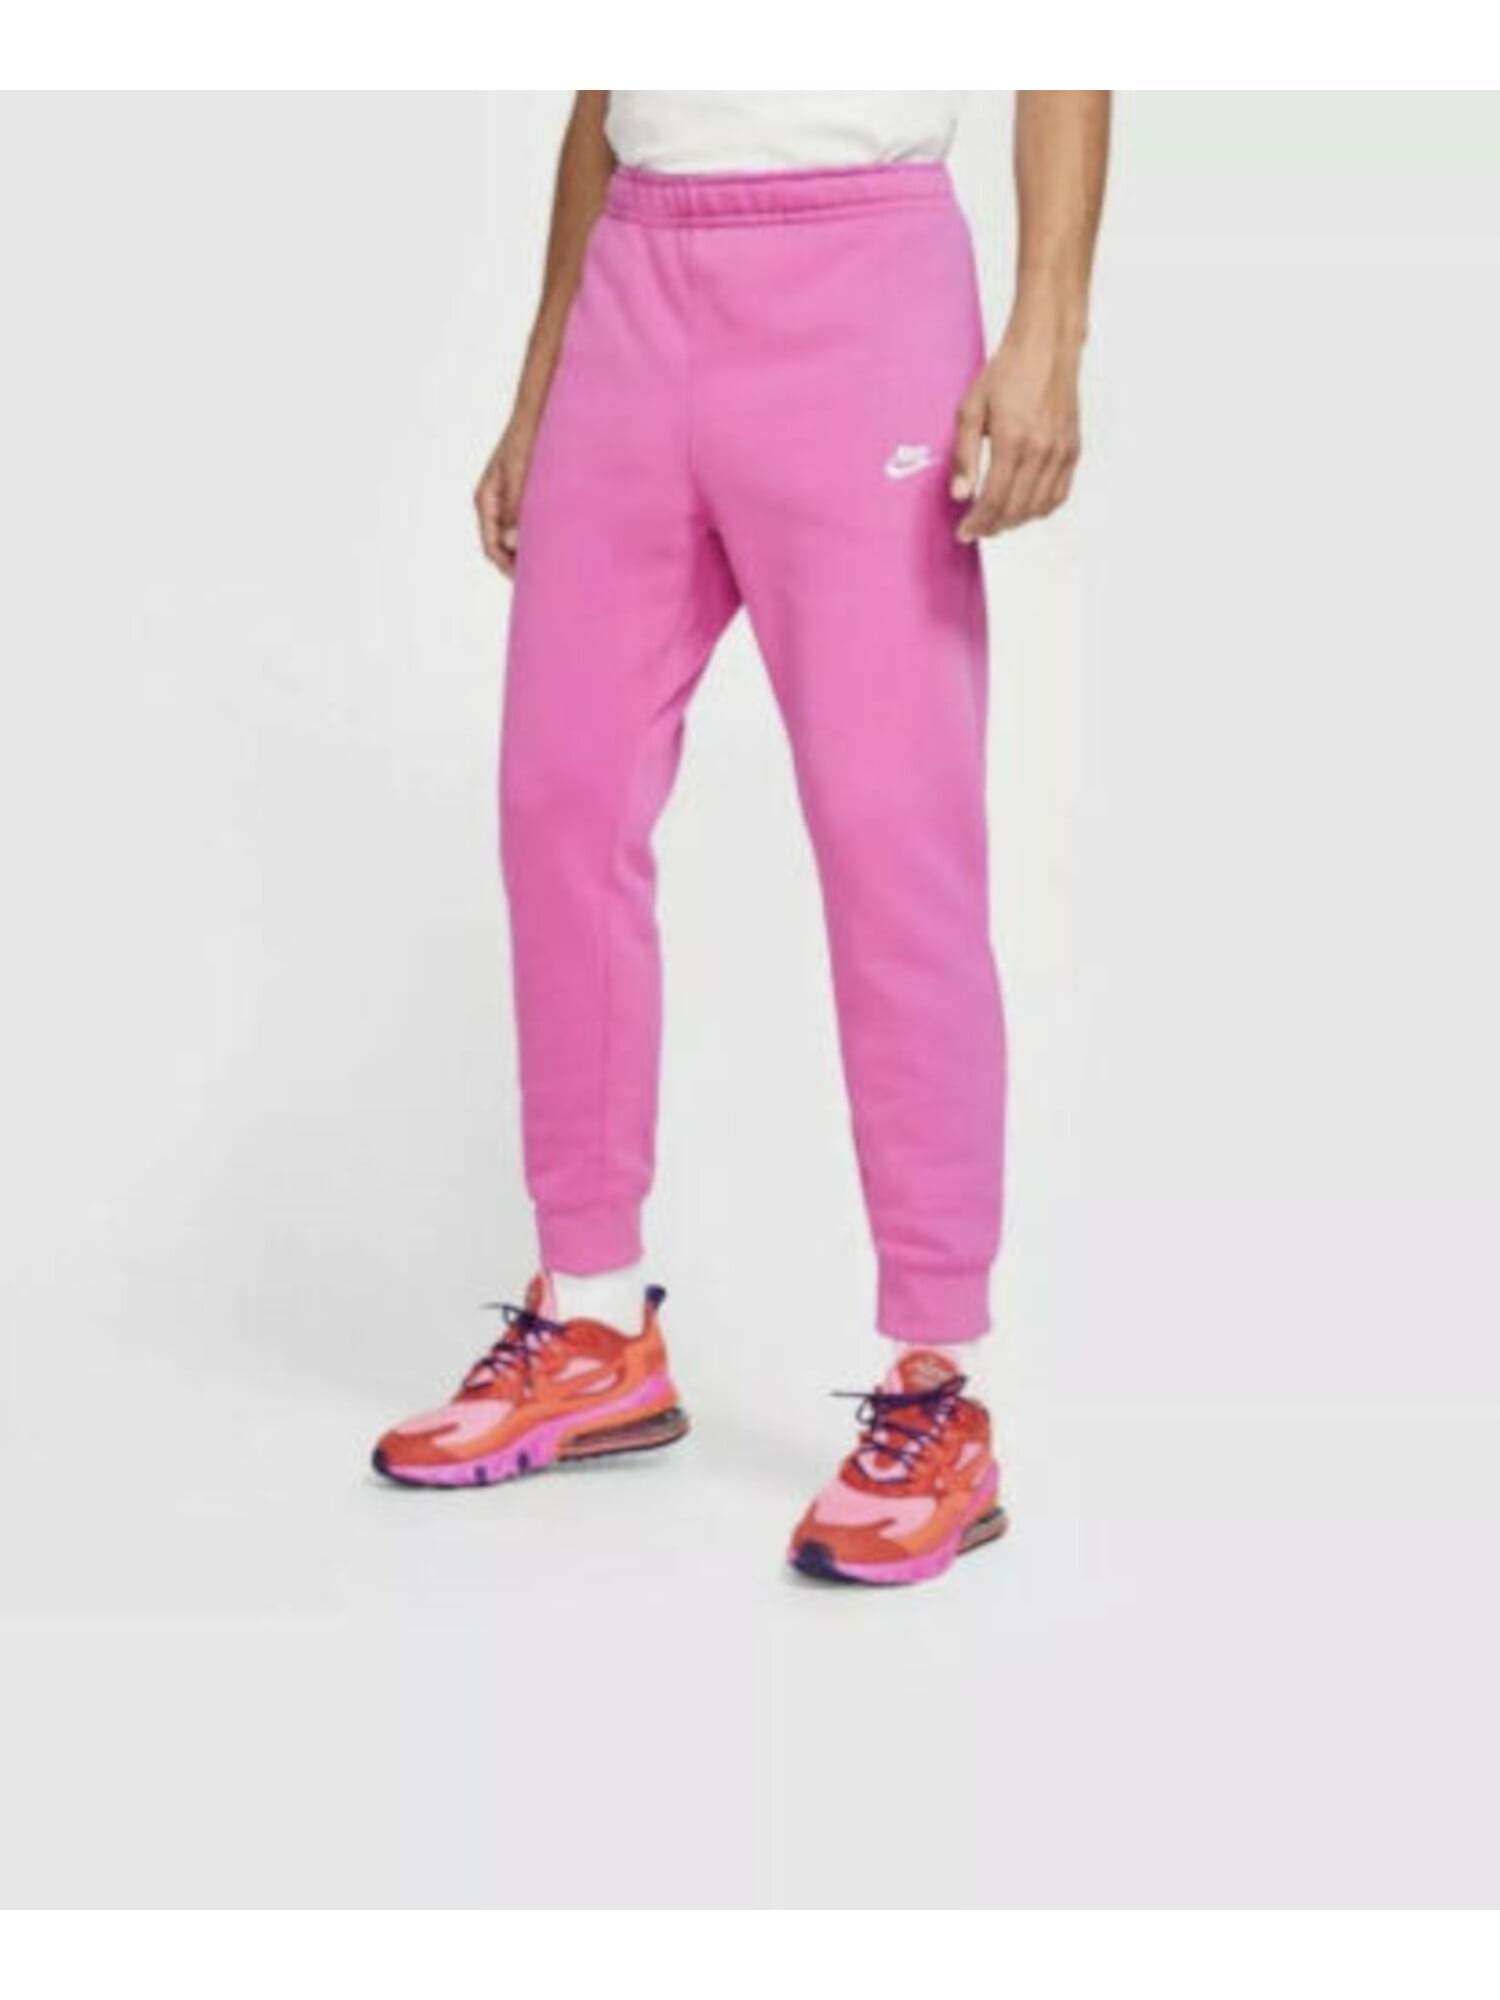 NIKE Mens Pink Logo Graphic Sweatpants XXL